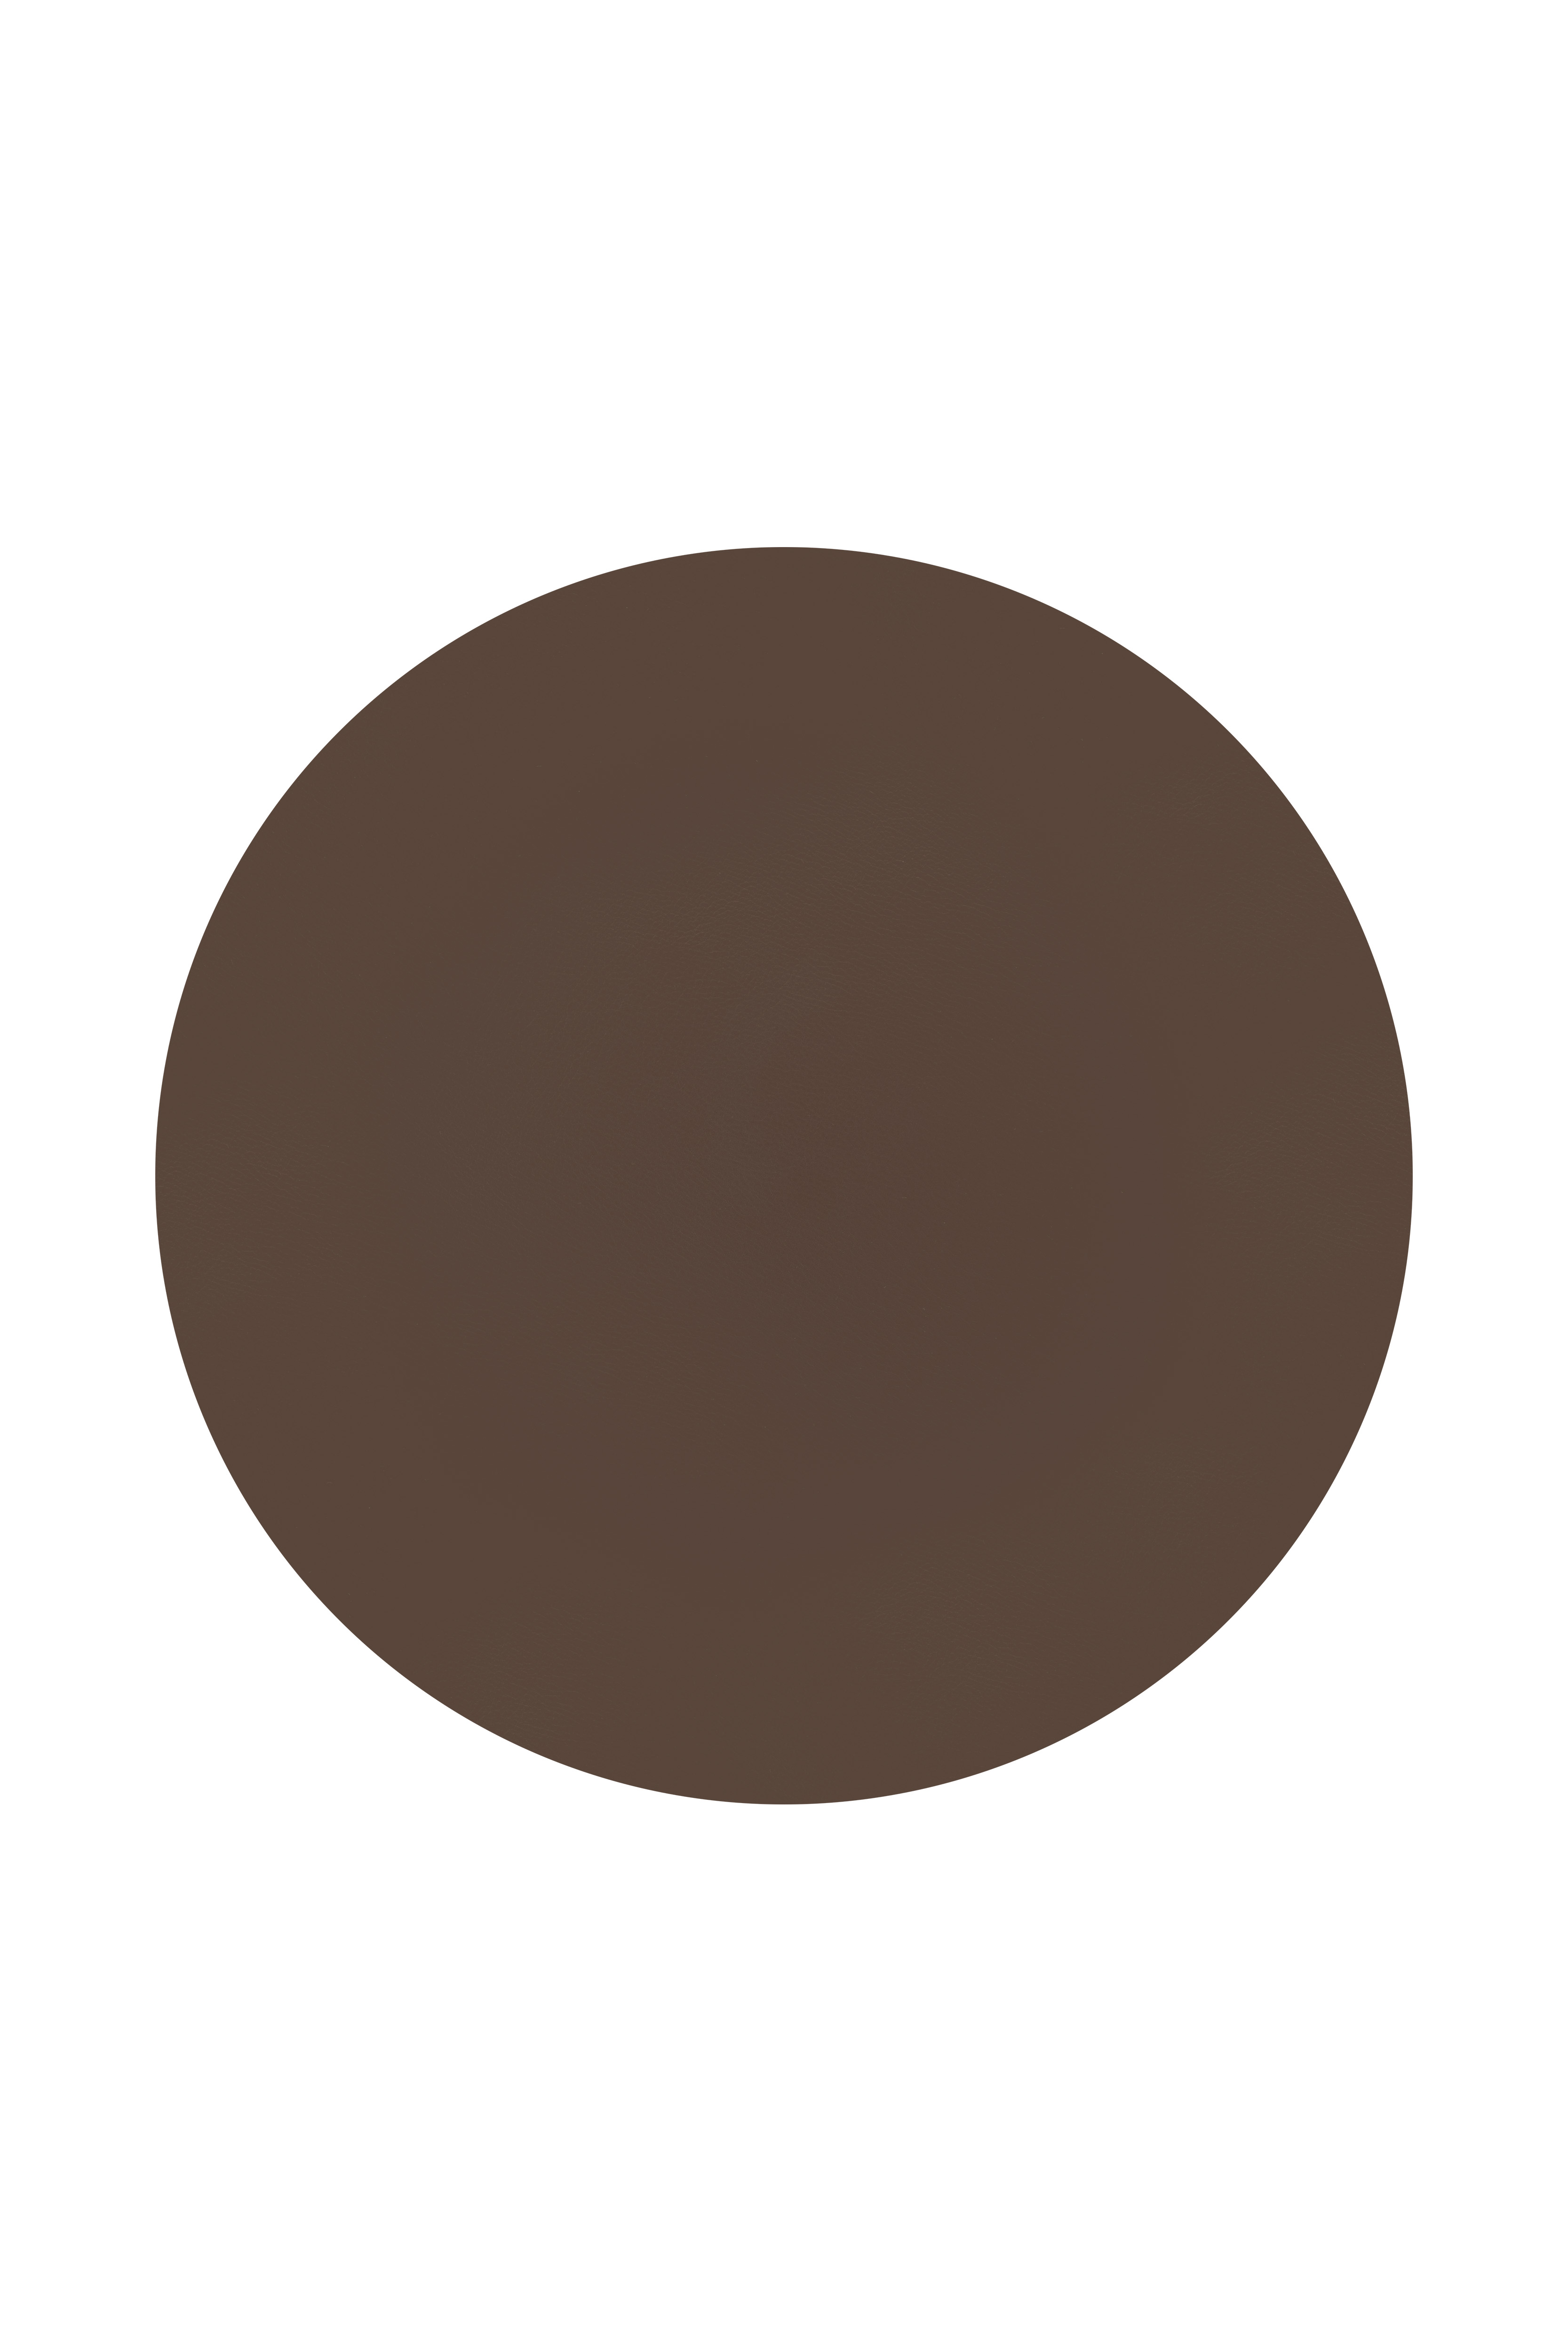 Placemat round - TOGO - 38cm, brown